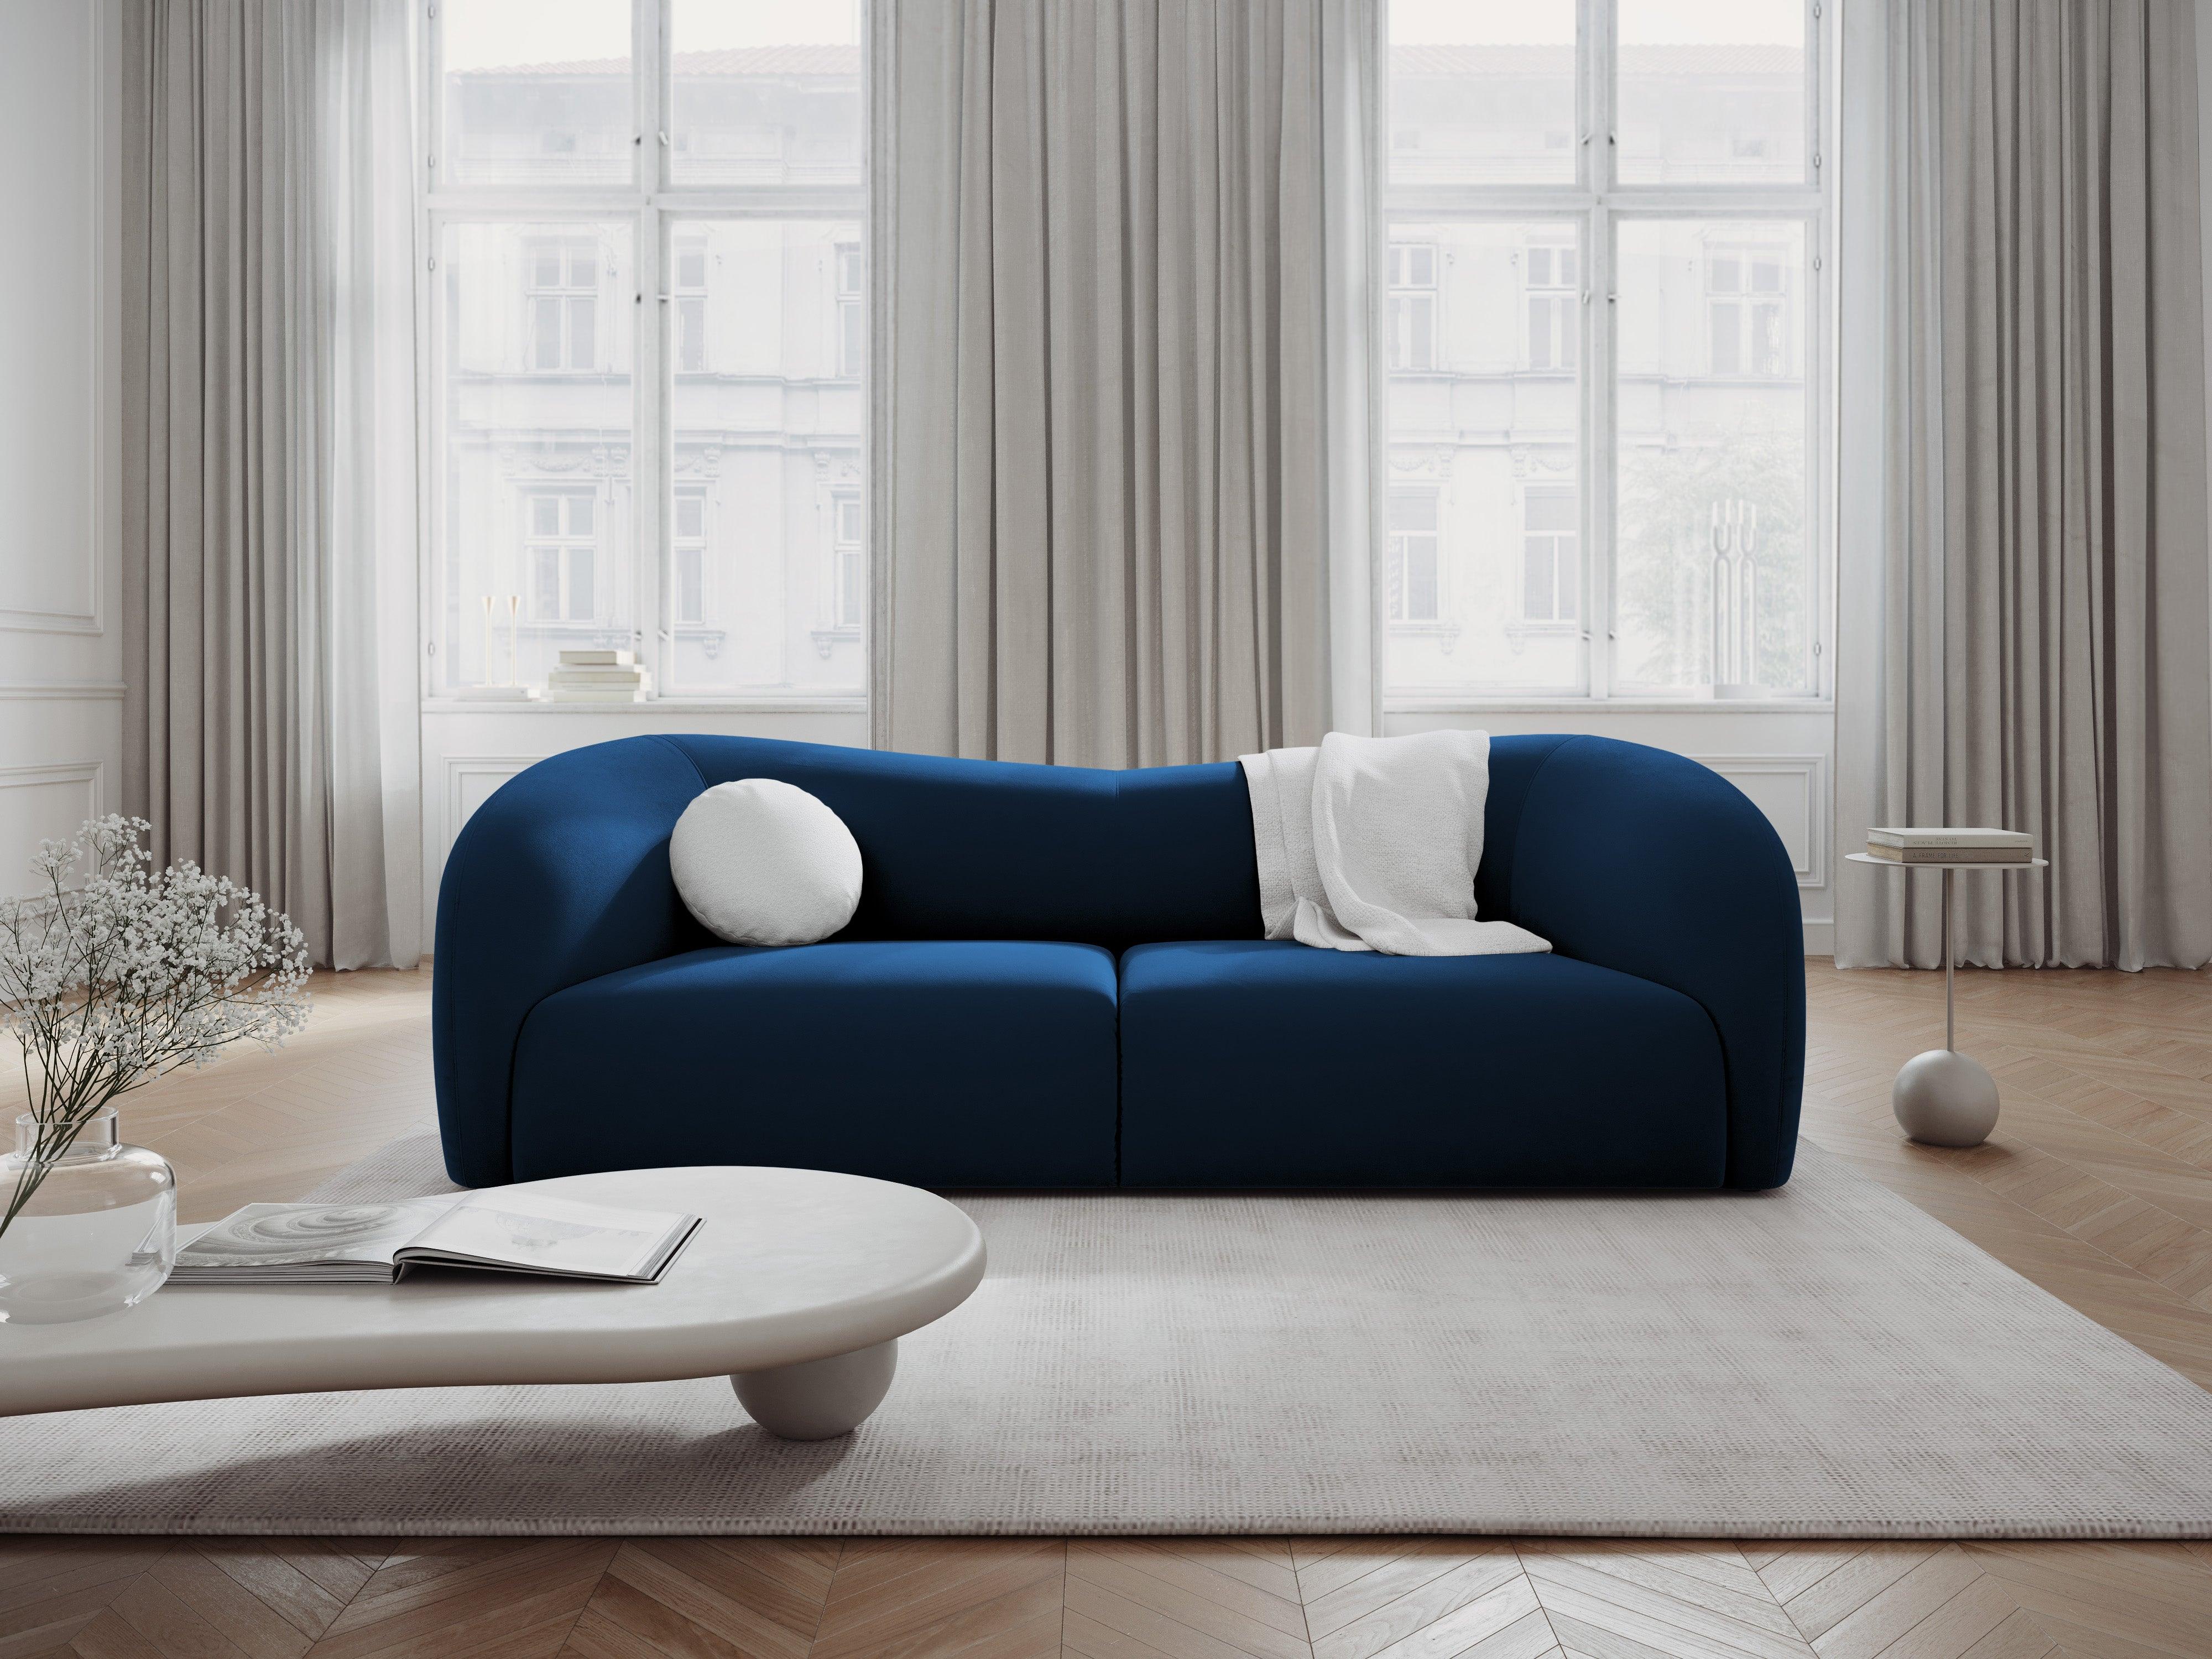 Velvet Sofa, "Santi", 3 Seats, Royal Blue, 237x90x75
Made in Europe Interieurs 86    Eye on Design